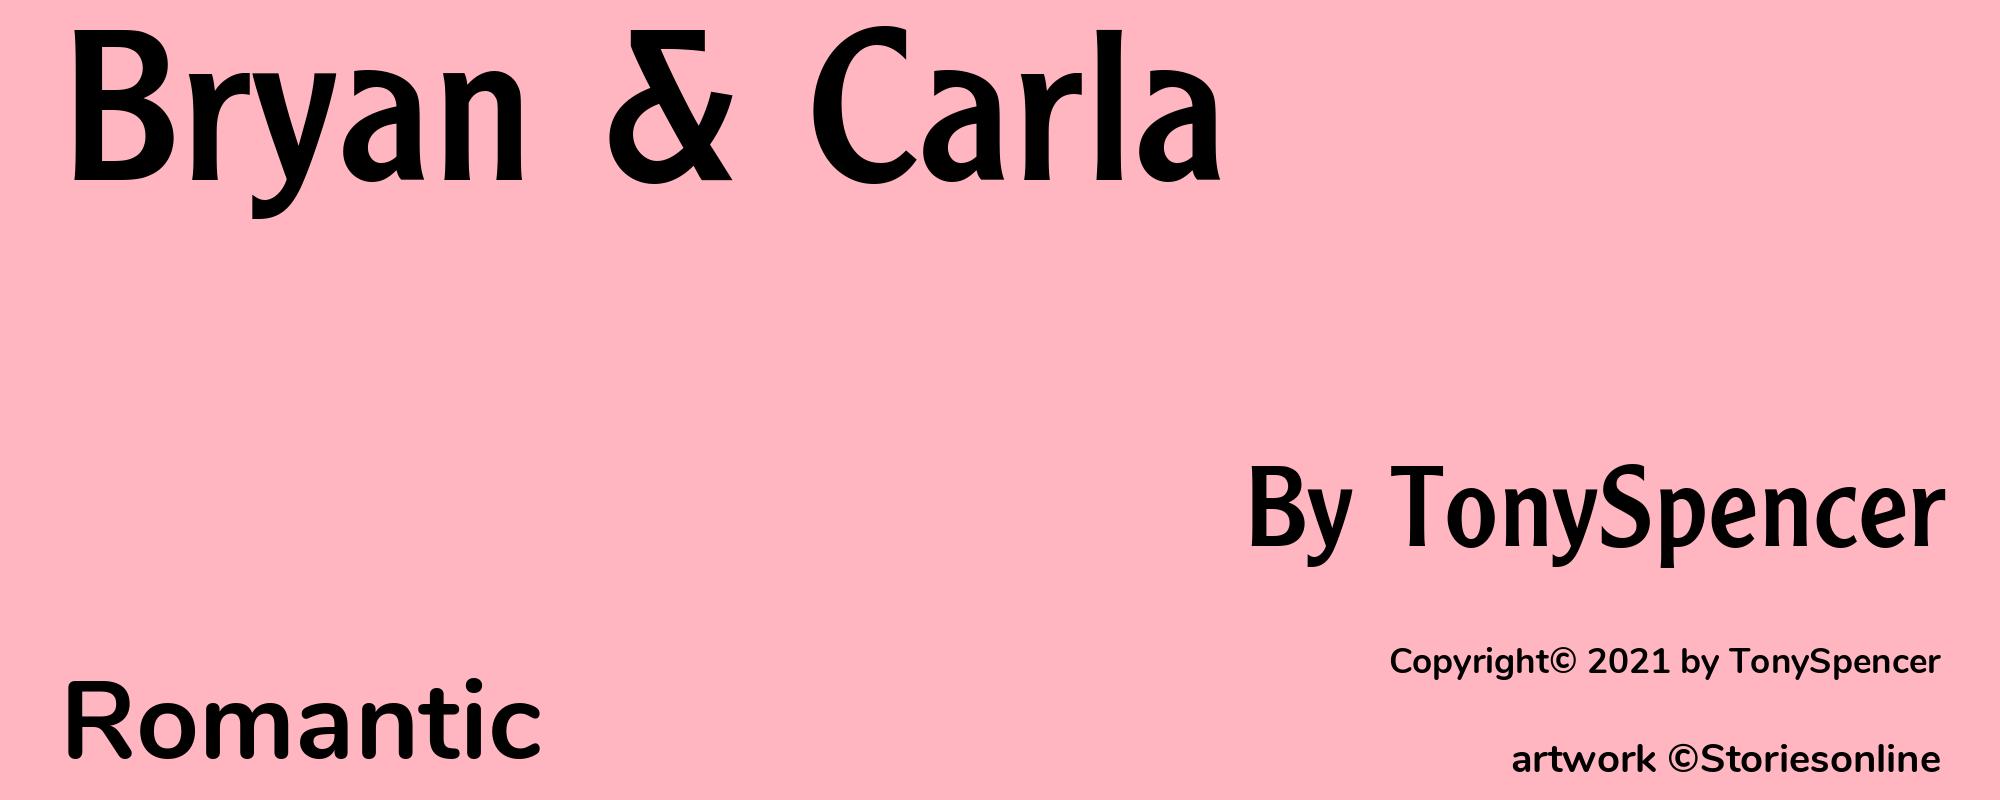 Bryan & Carla - Cover